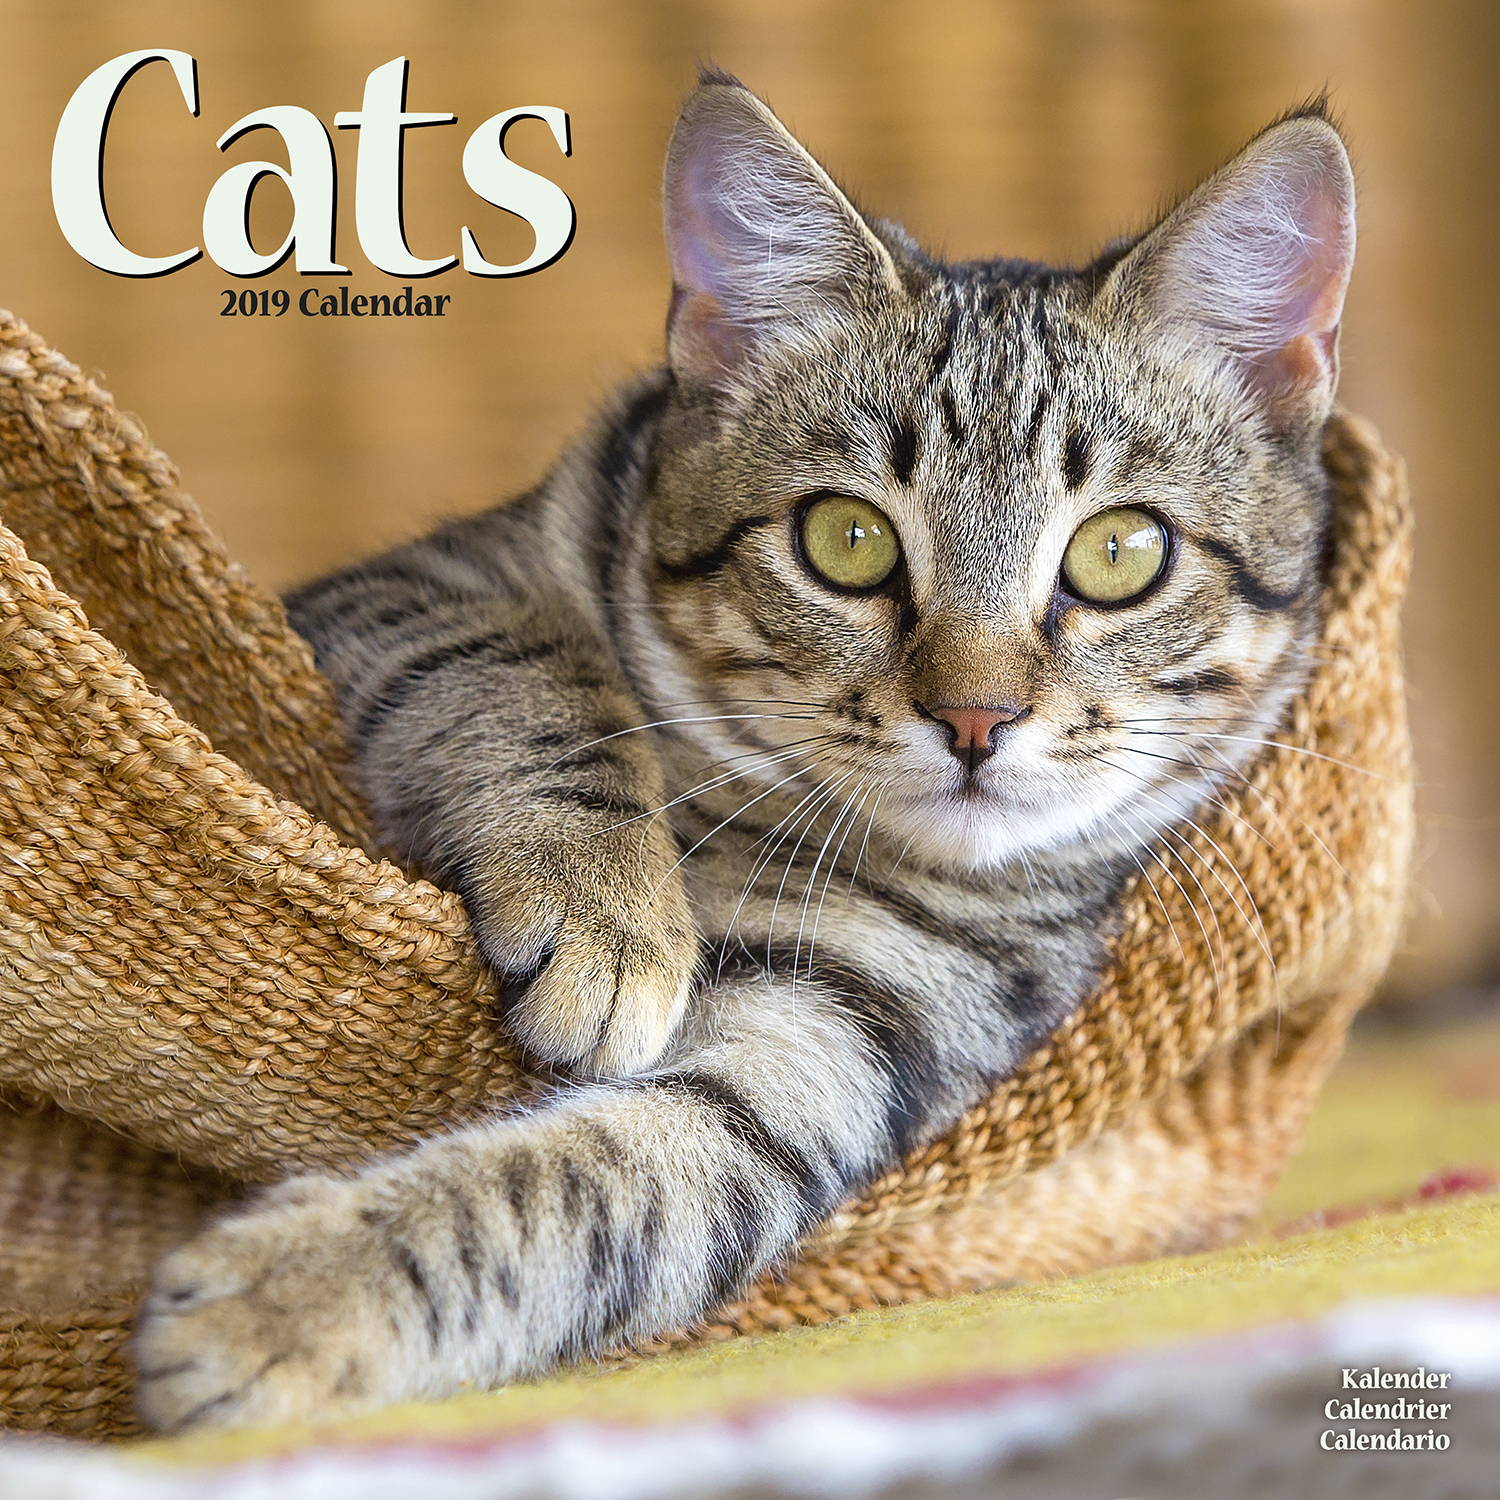 Cats Calendar, Cat Calendars | MegaCalendars